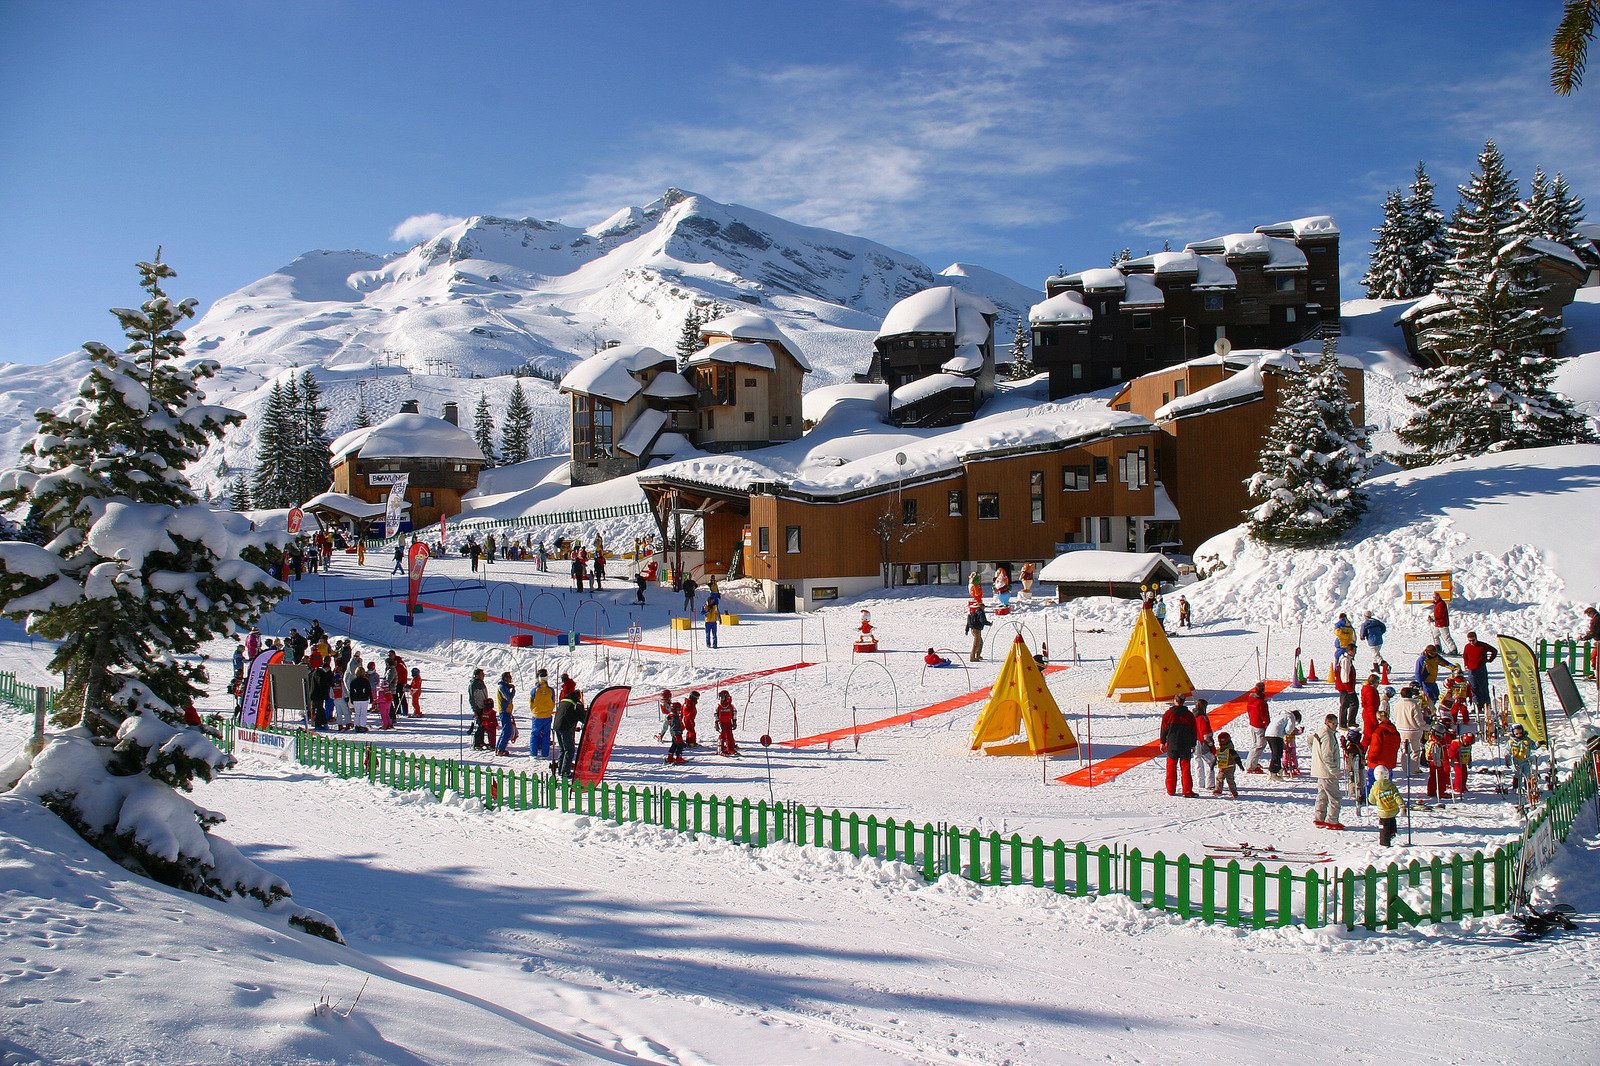 France has the highest number of ski resorts